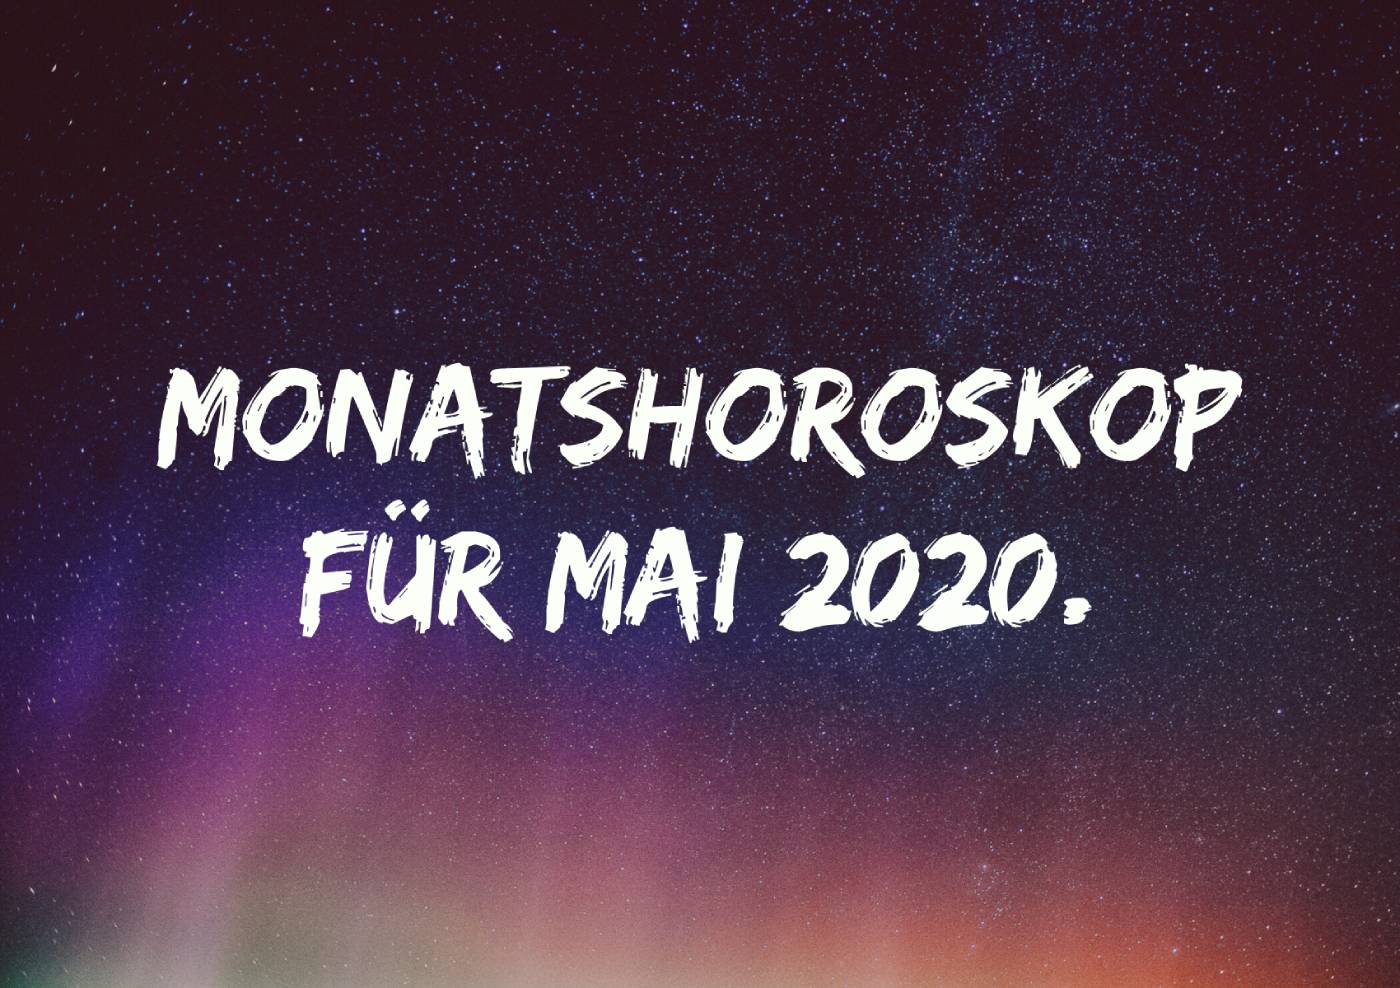 Monatshoroskop für Mai 2020.